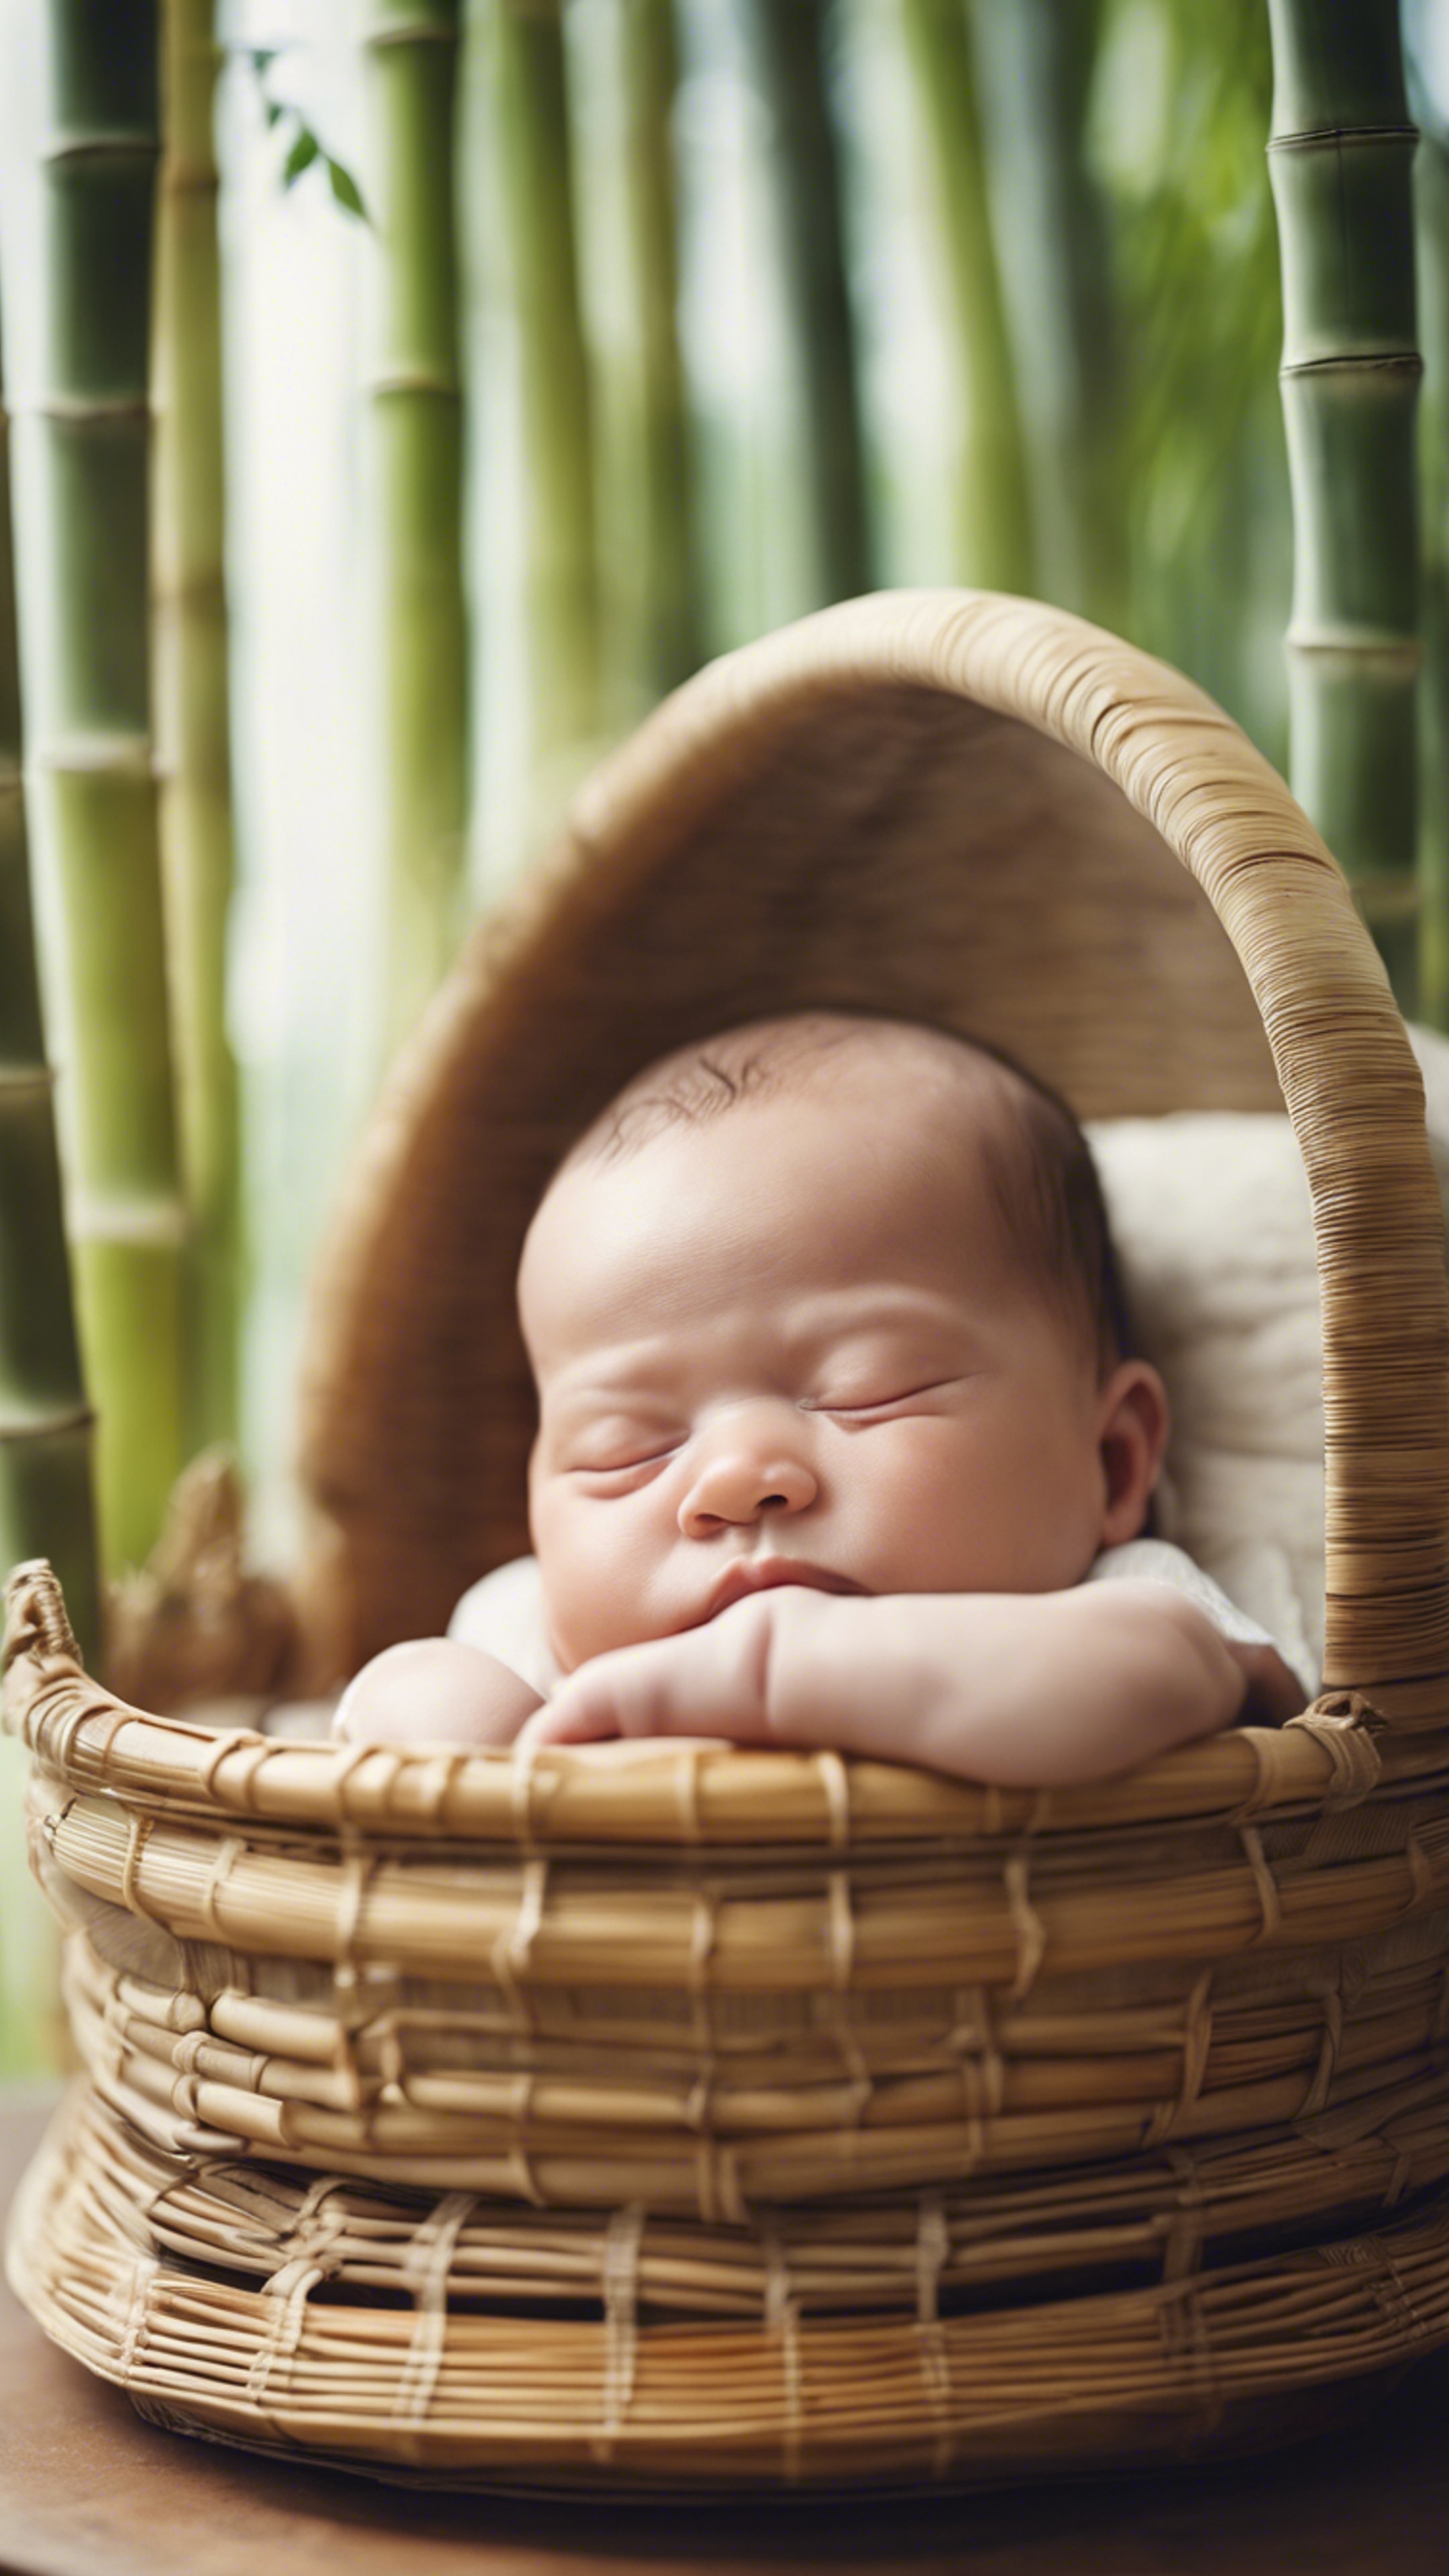 A newborn baby sleeping peacefully in a bamboo cradle.壁紙[aa600c14ac9b4a439482]